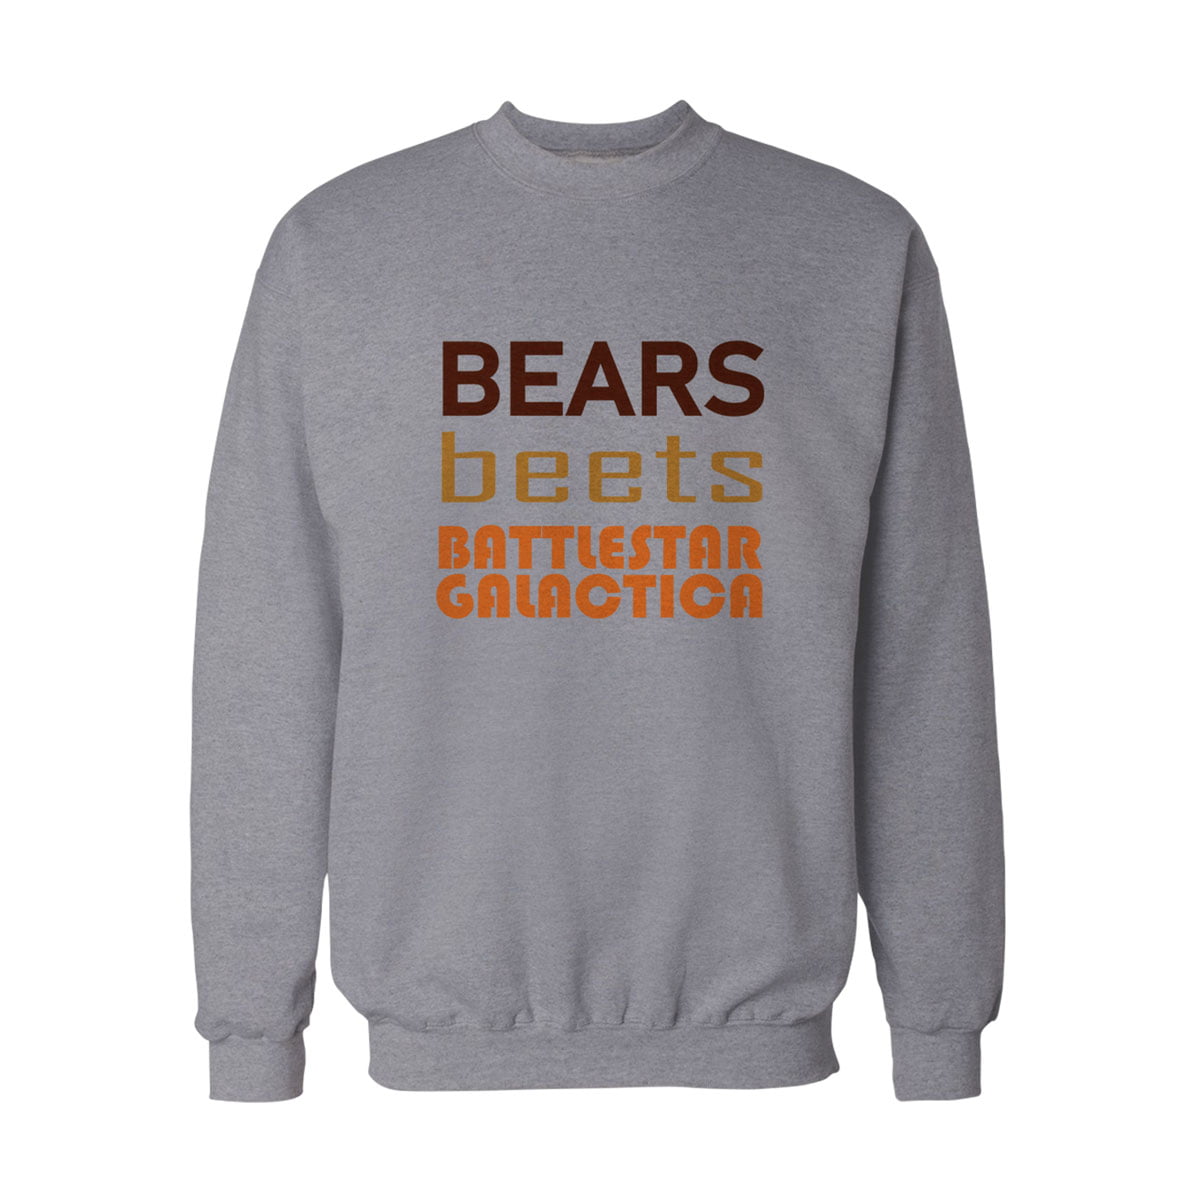 The office bears beets bg swwatshirt g - bears beets battlestar galactica unisex sweatshirt - figurex